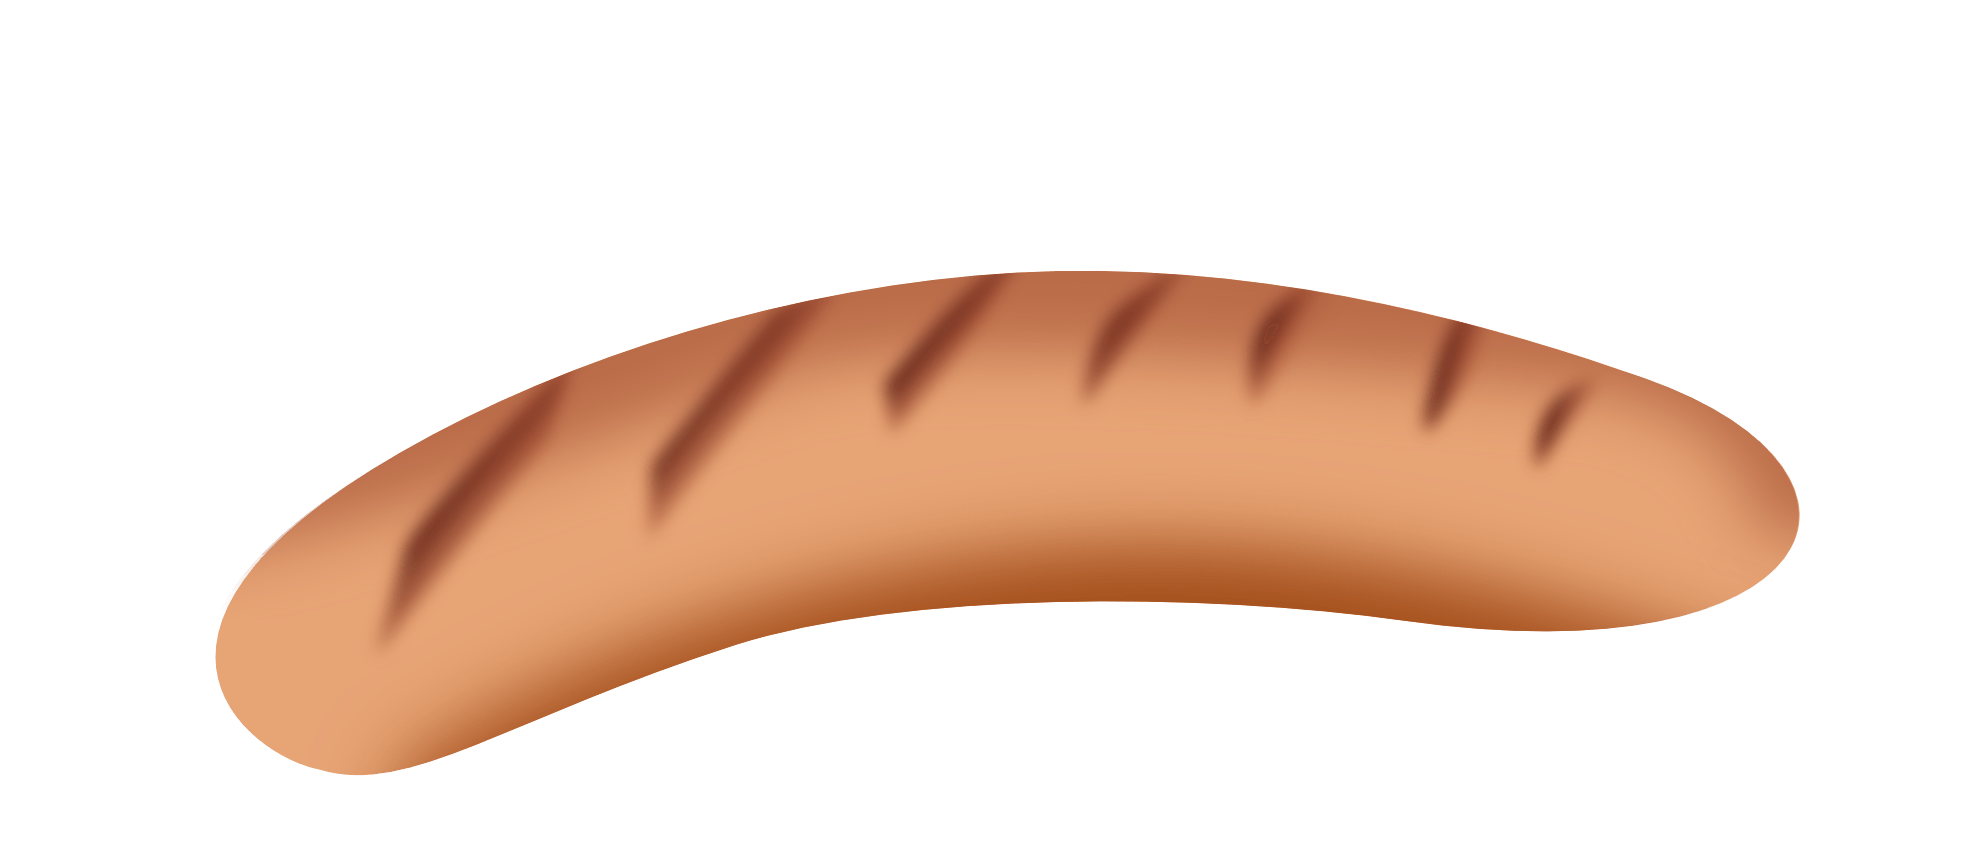 Hot Dog Sausage Png Image PNG Image